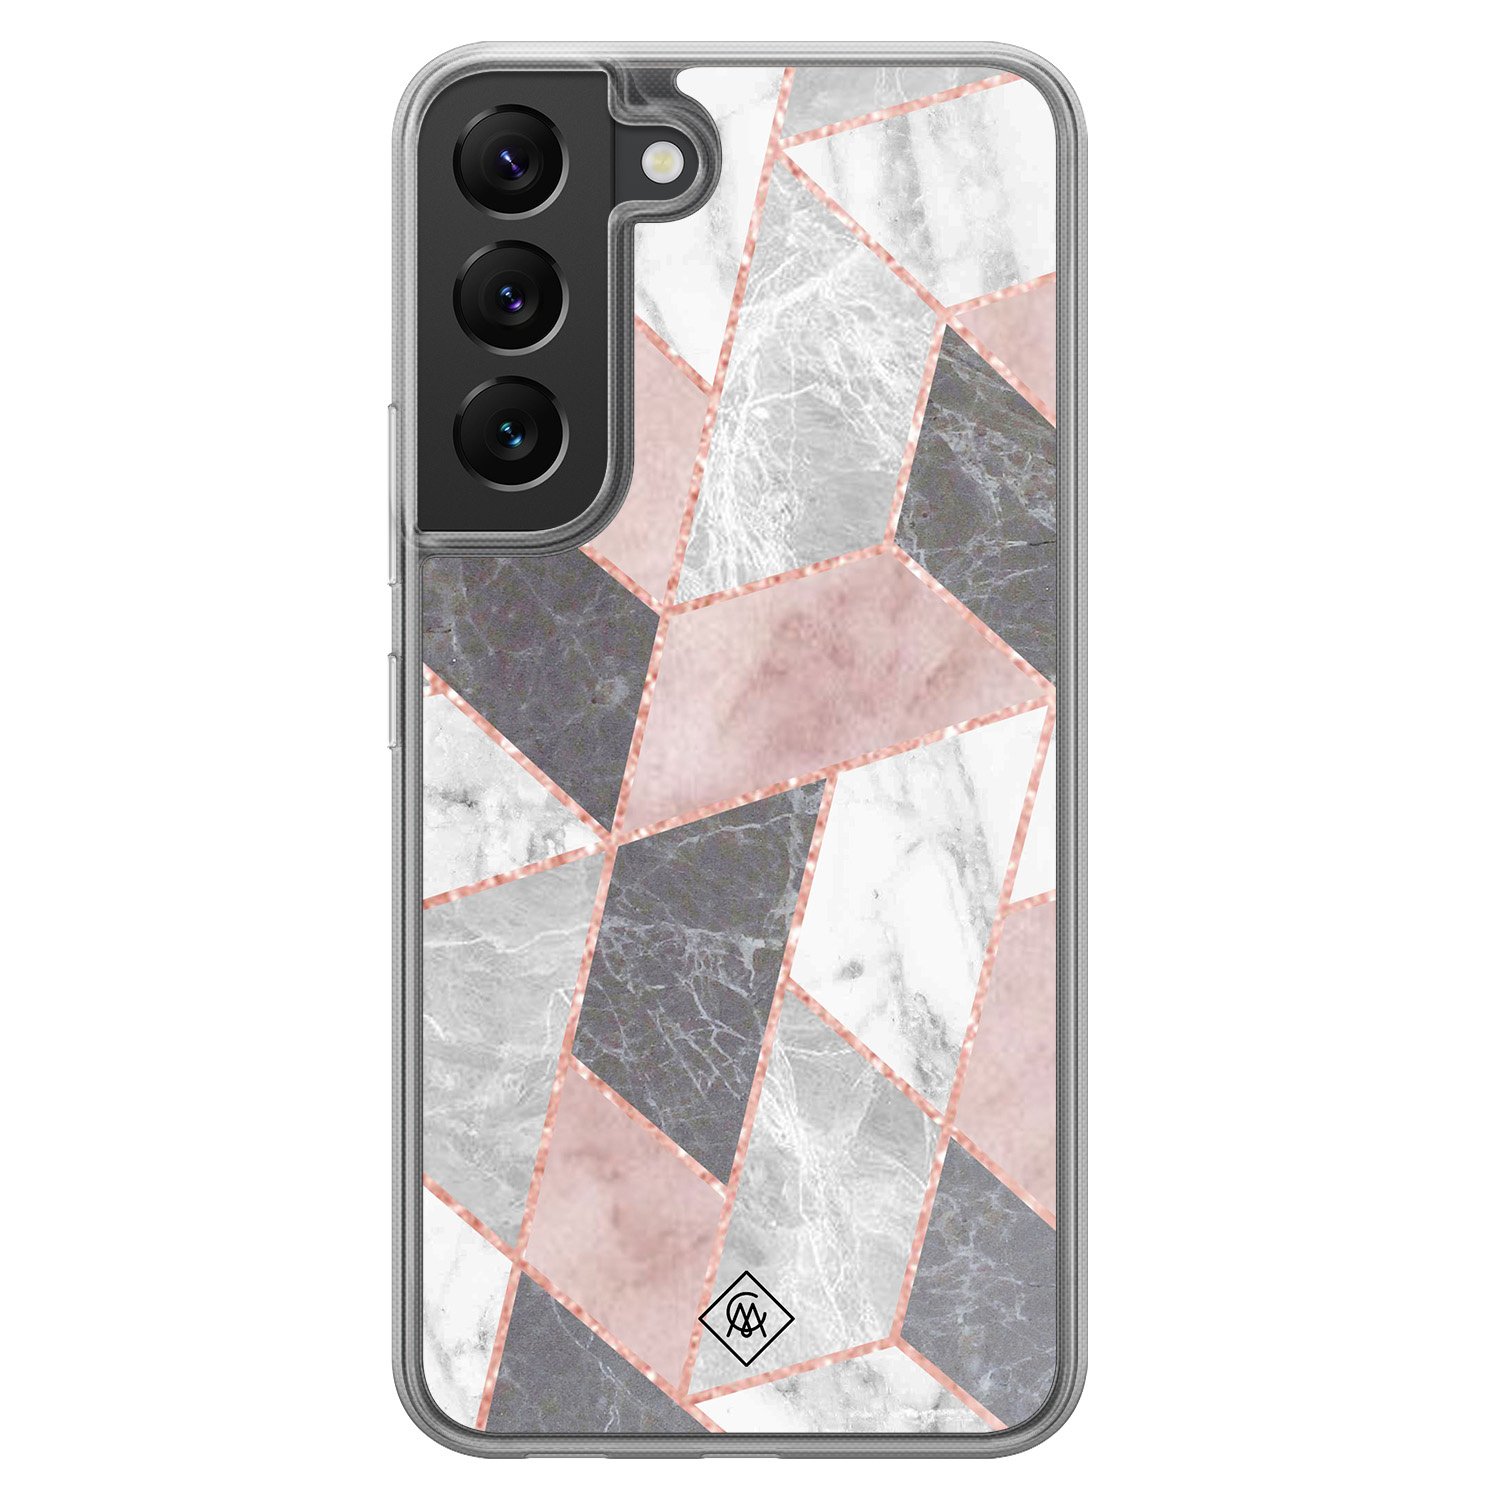 Samsung Galaxy S22 hoesje siliconen - Stone grid marmer / Abstract marble - Casimoda® 2-in-1 case hybride - Schokbestendig - Geometrisch patroon - Verhoogde randen - Paars, Transpa